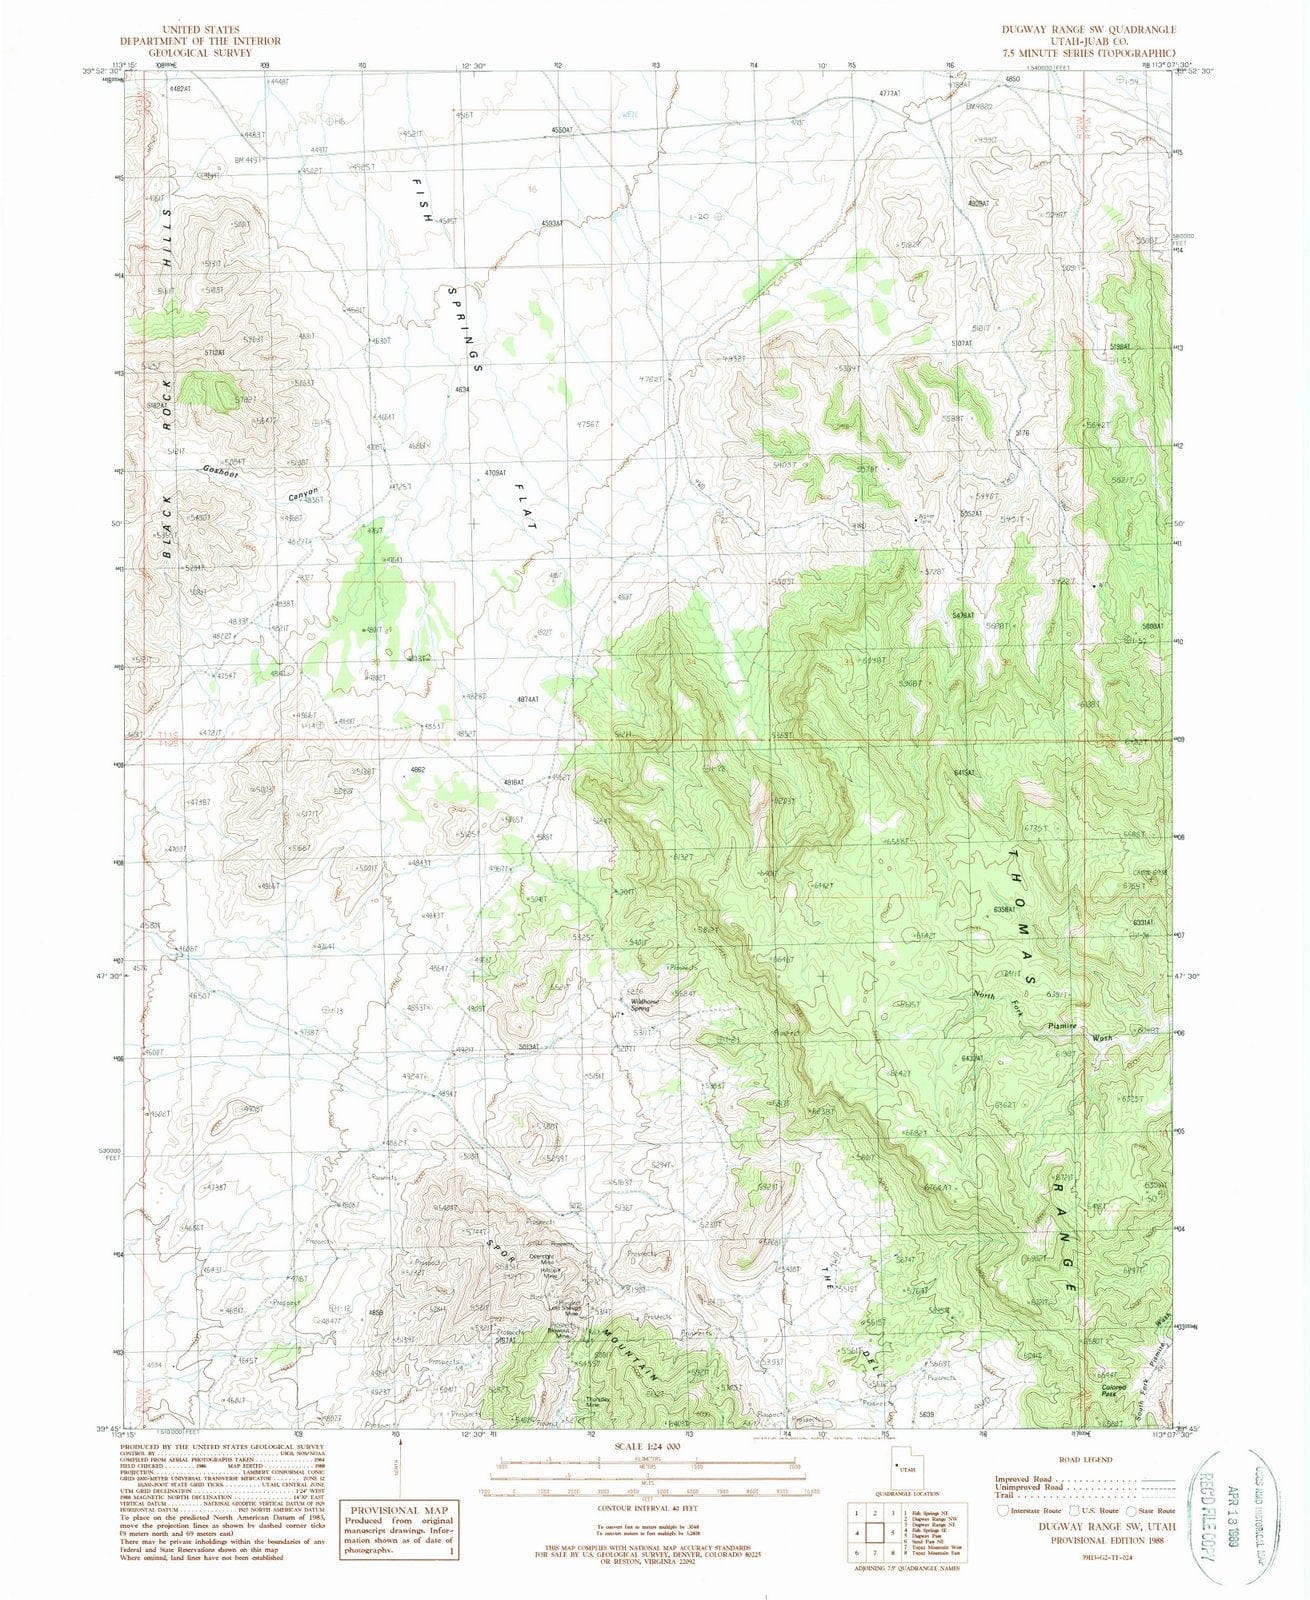 1988 Dugway Range, UT - Utah - USGS Topographic Map